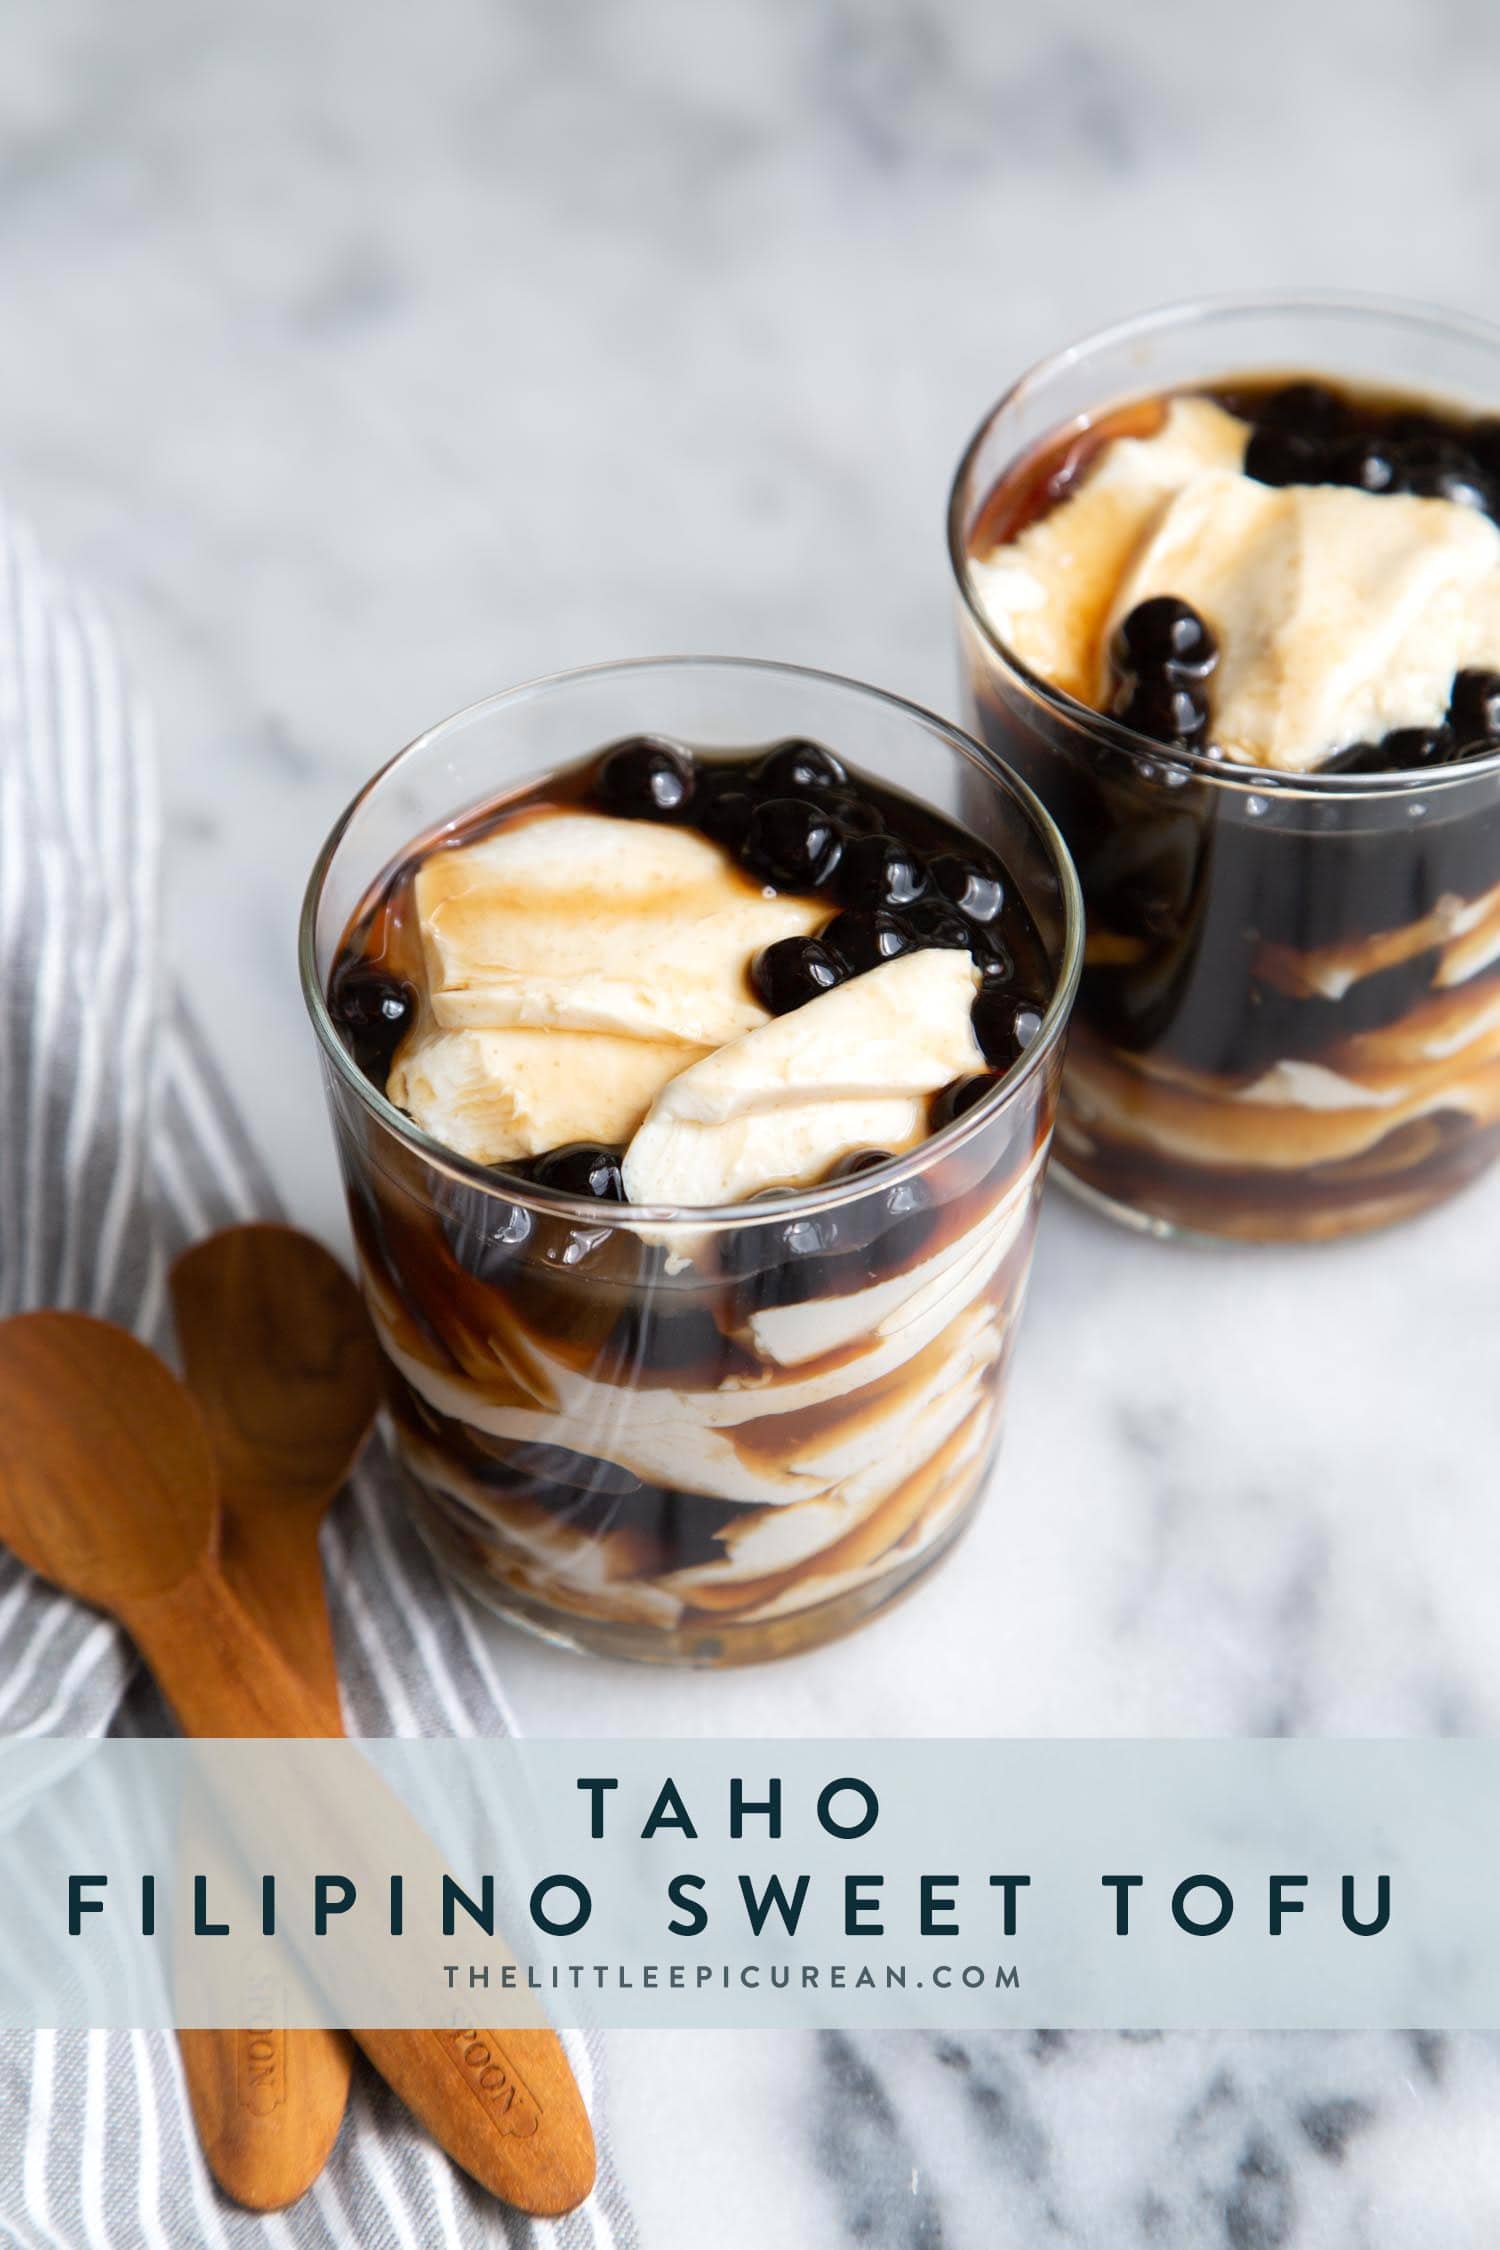 Taho: Filipino Sweet Tofu dessert consisting of silken tofu, arnibal, and tapioca balls